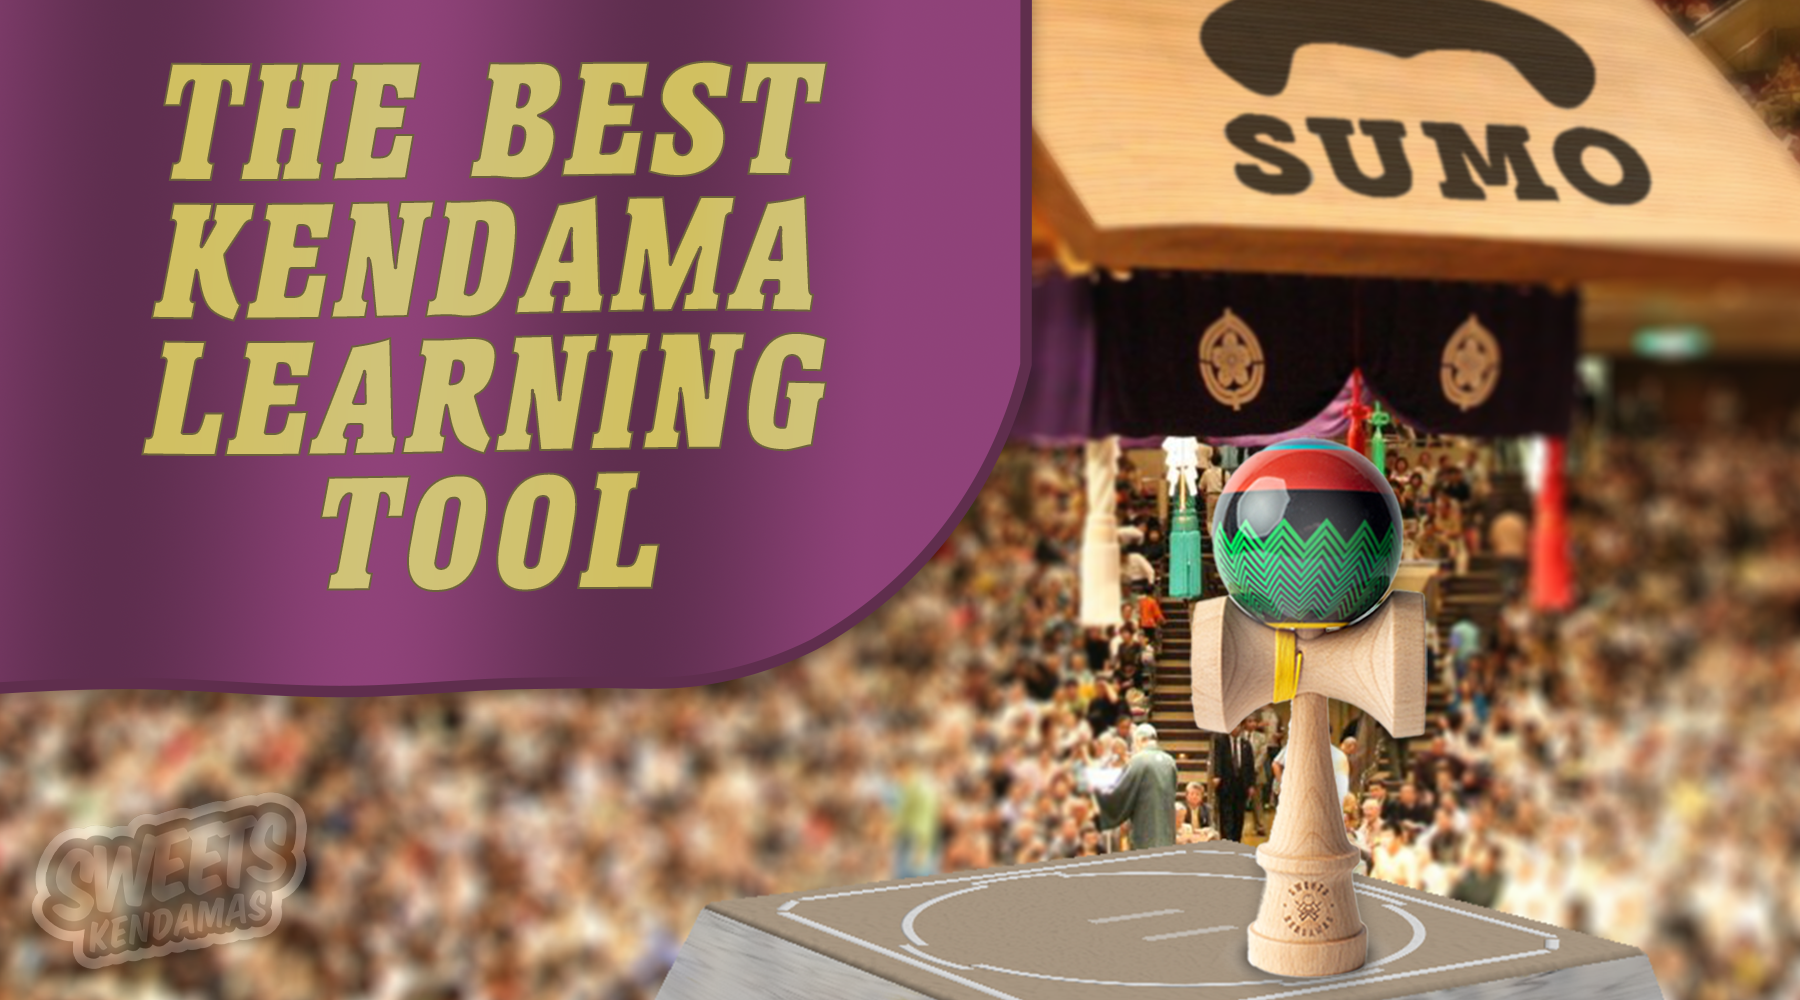 The Best Kendama Learning Tool - Sweets Sumo Kendama